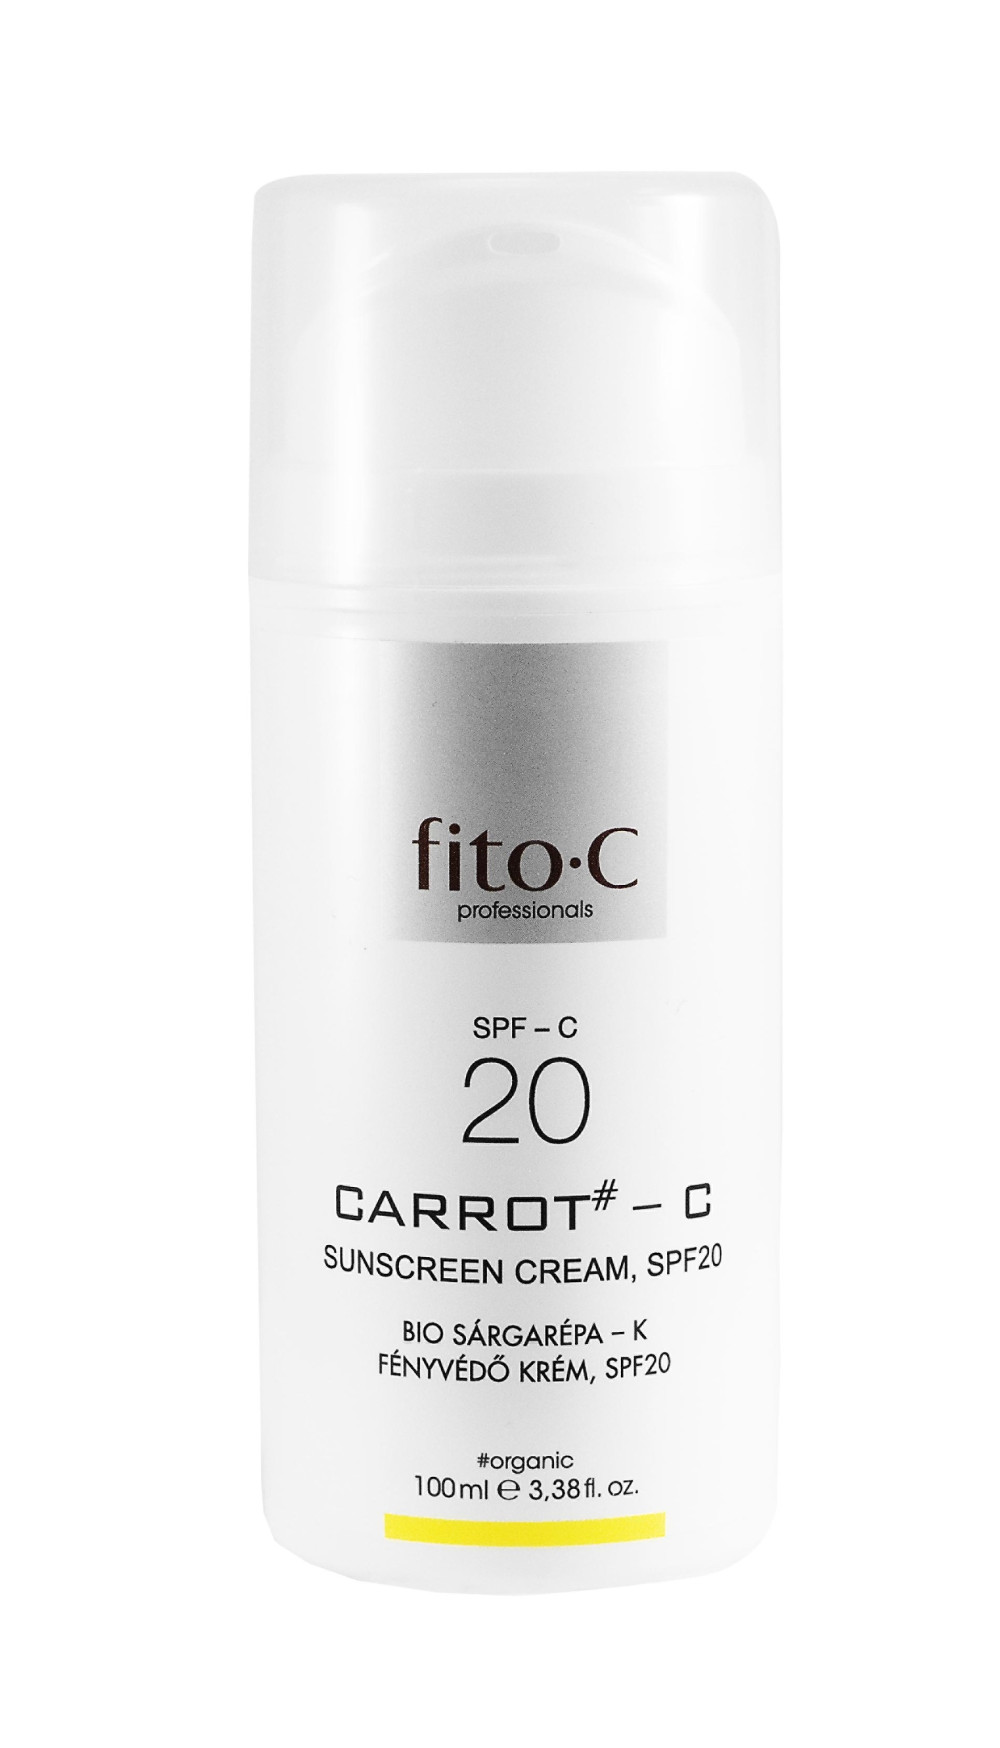 fito.C - Carrot - C Sunscreen Cream, SPF20 - Bio Sárgarépa - K Fényvédő Krém, SPF20, 100ml - kémiai fényszűrőkkel